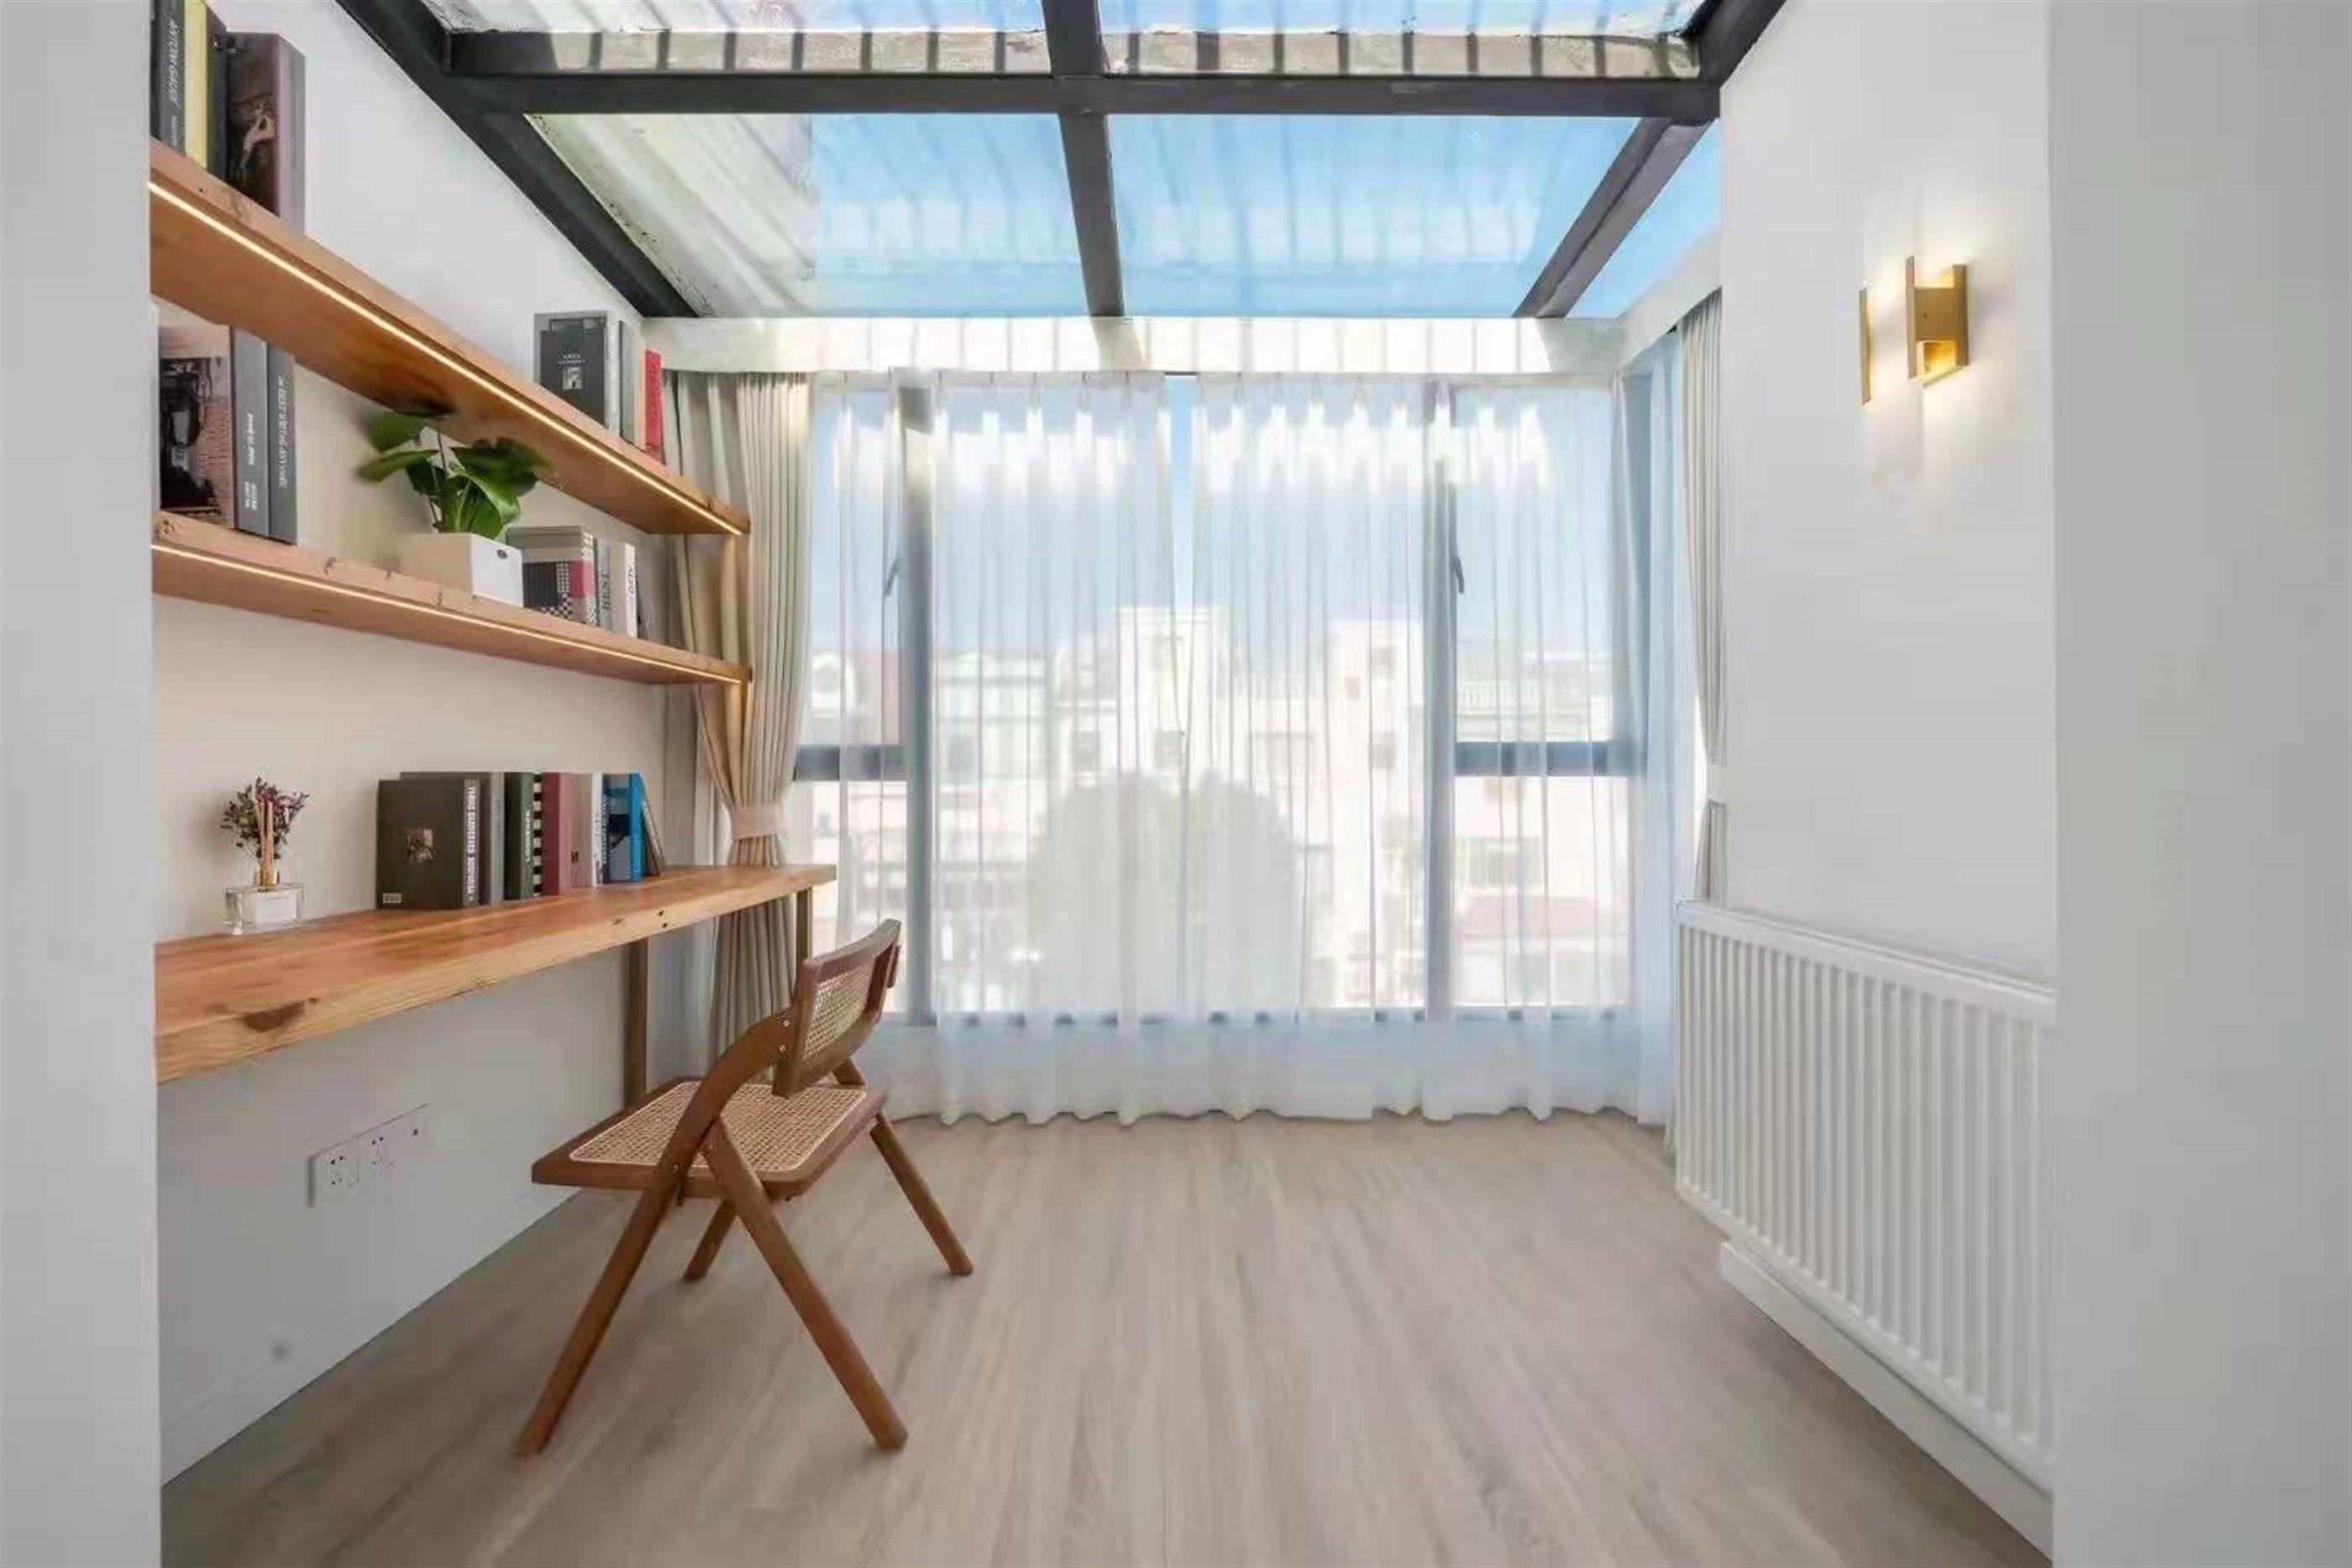 Glass sunroom Affordable Modern 4-floor 4BR House for Rent in Qingpu Shanghai